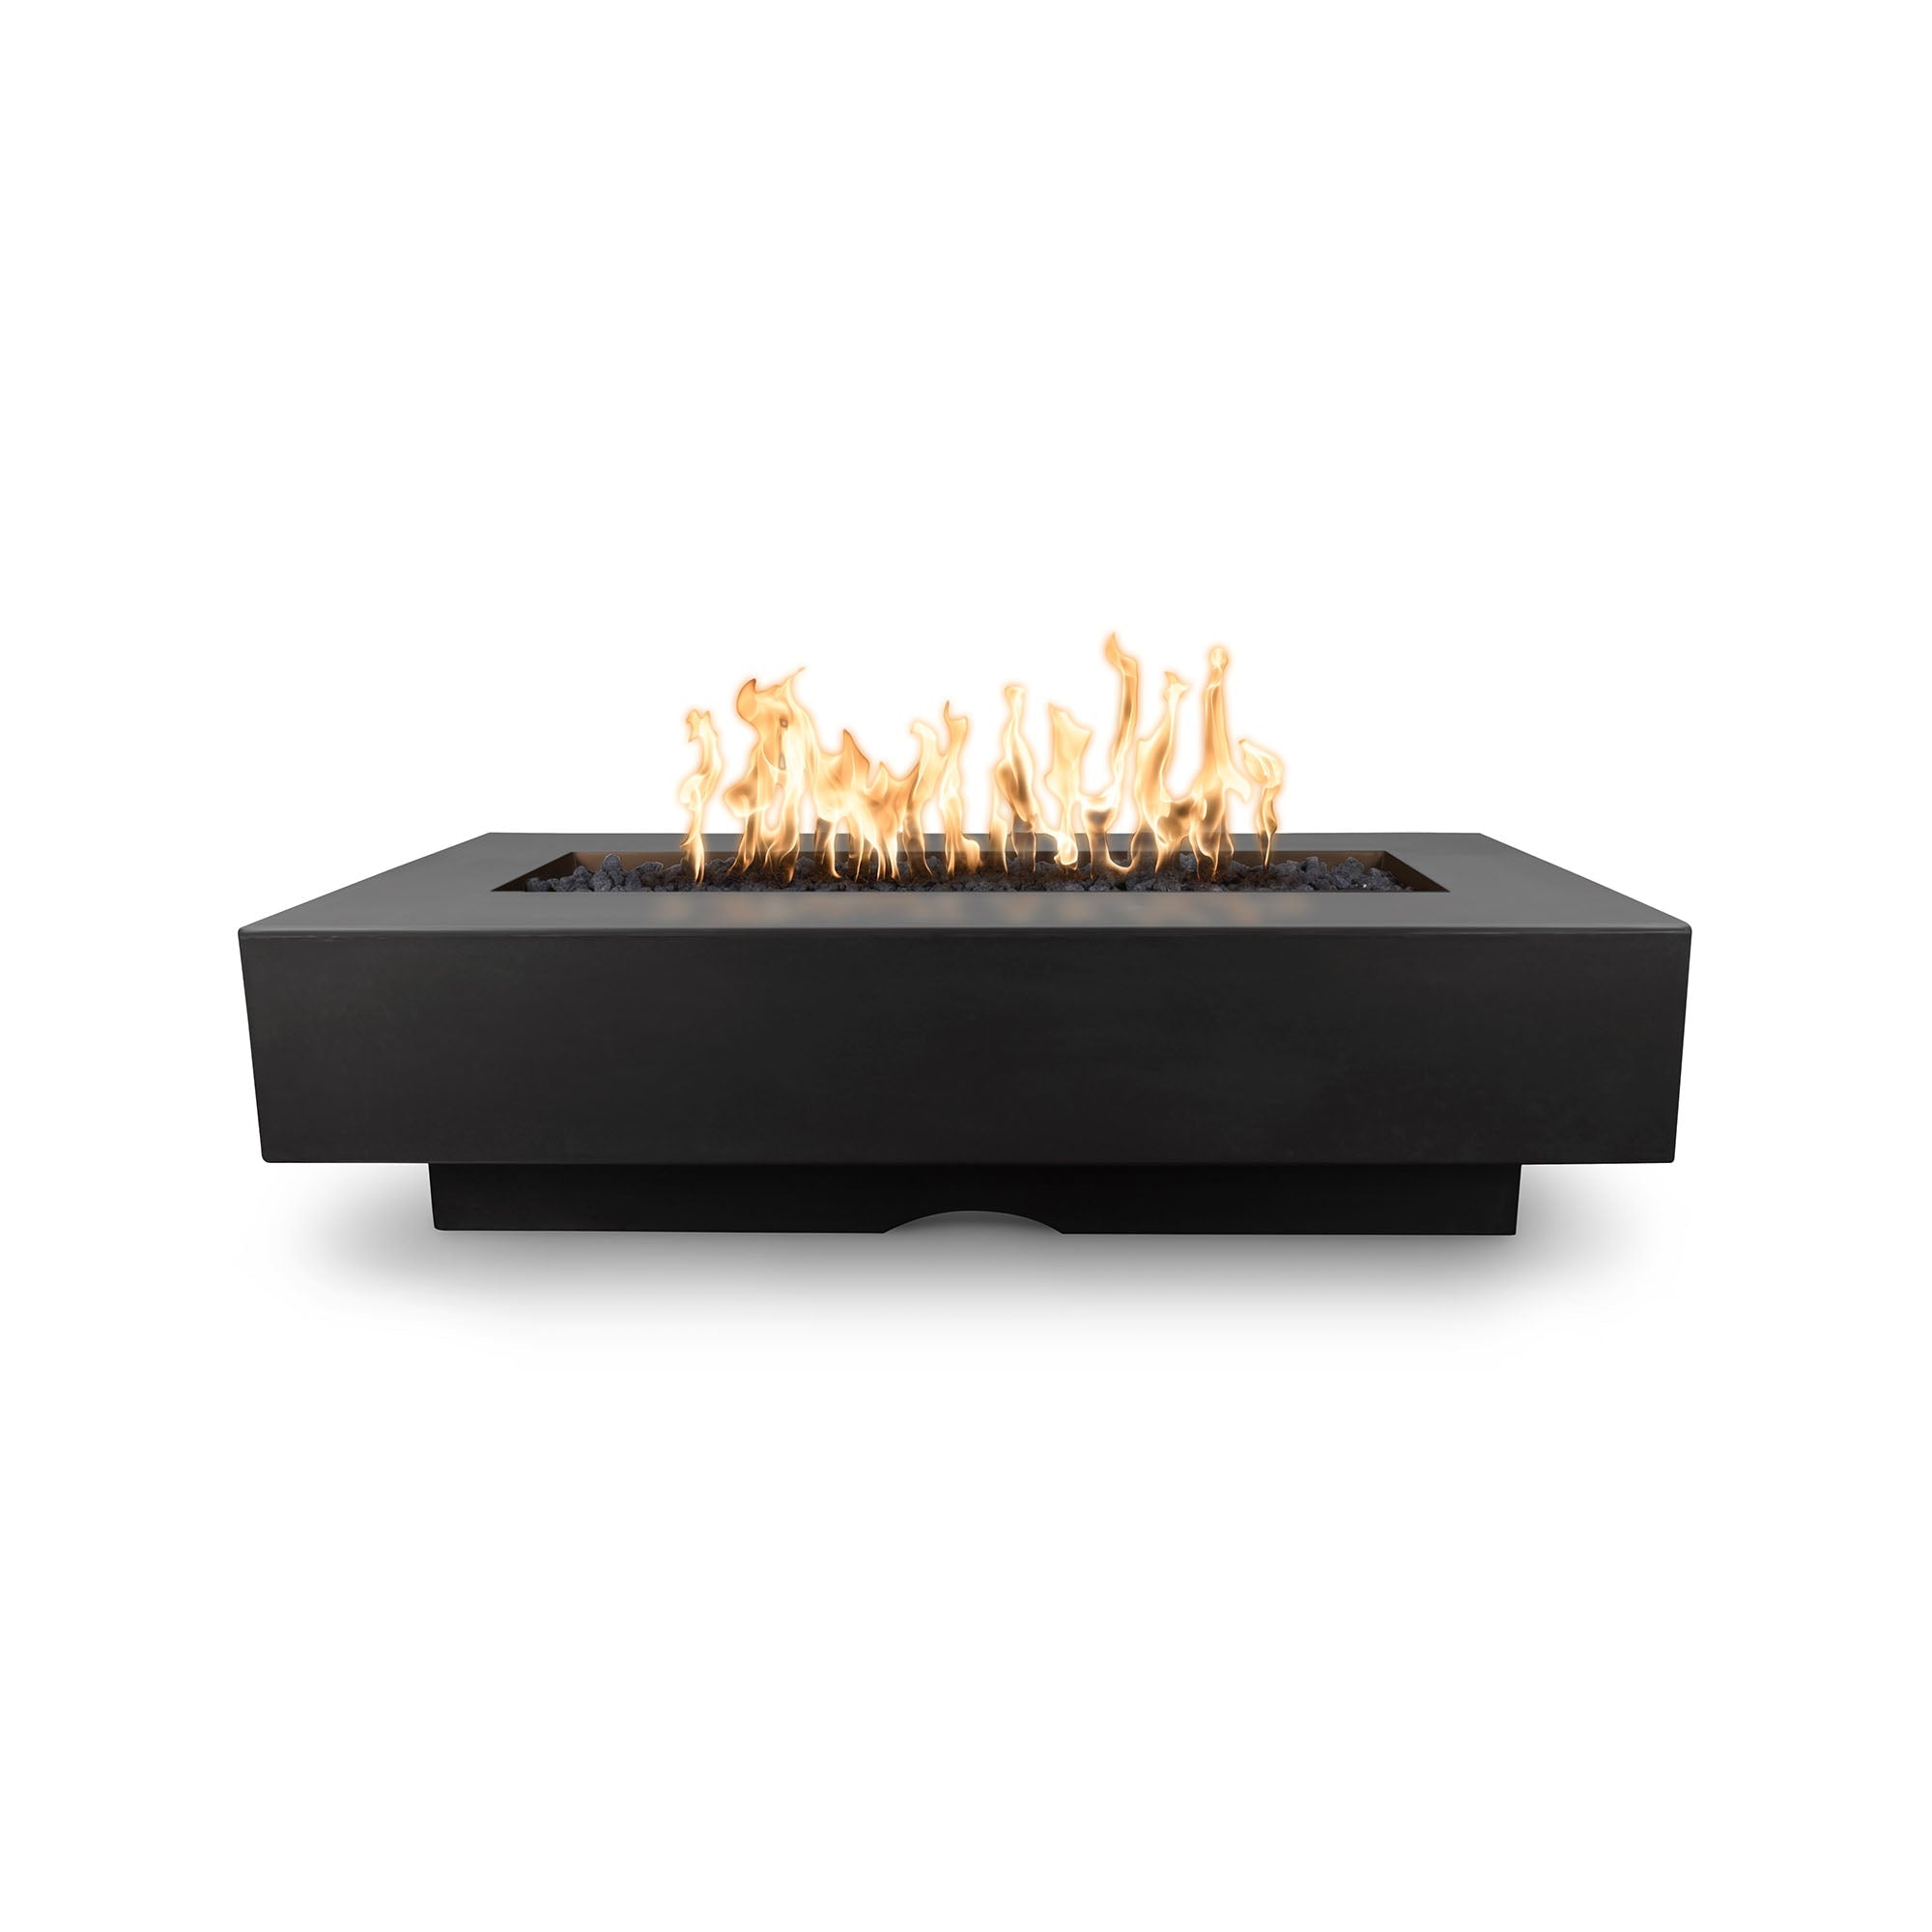 The Outdoor Plus 60" Del Mar GFRC Concrete Rectangle Fire Pit Table in Black